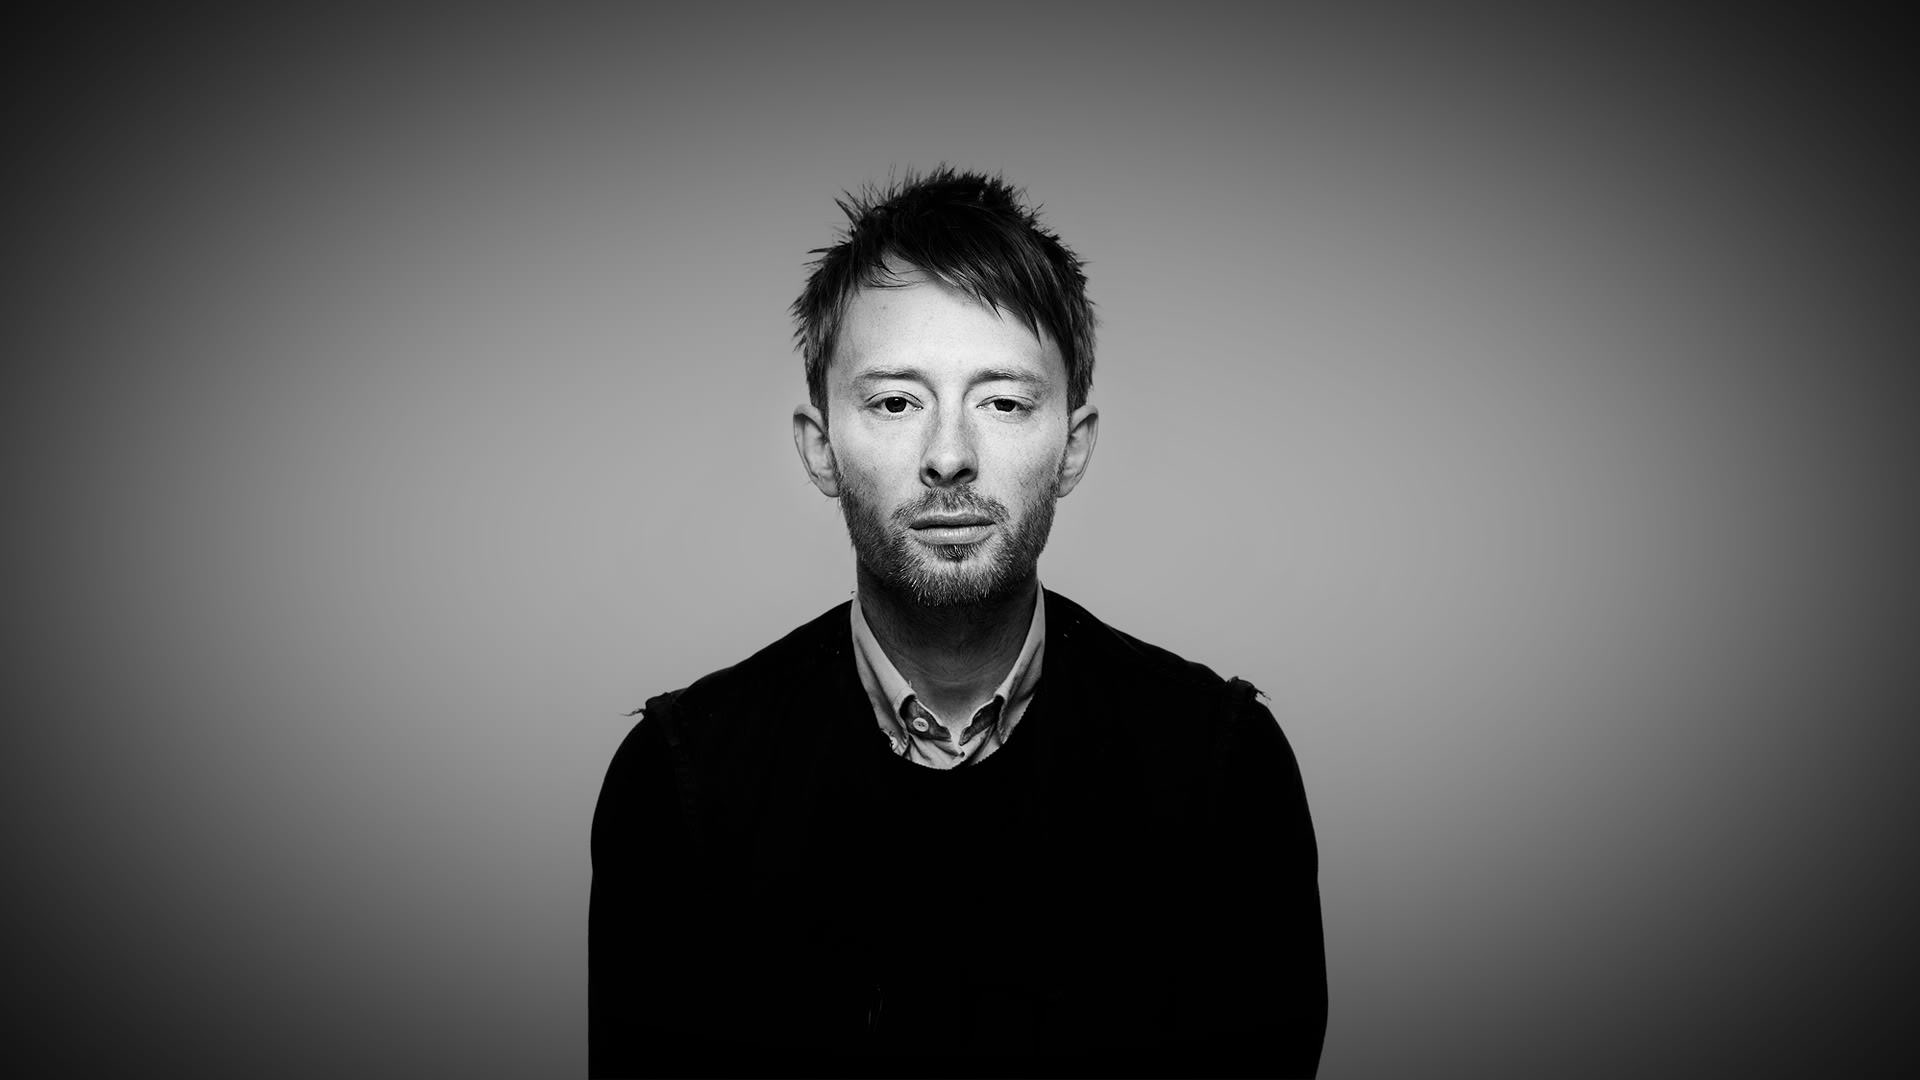 Thom Yorke Wallpaper Background Image